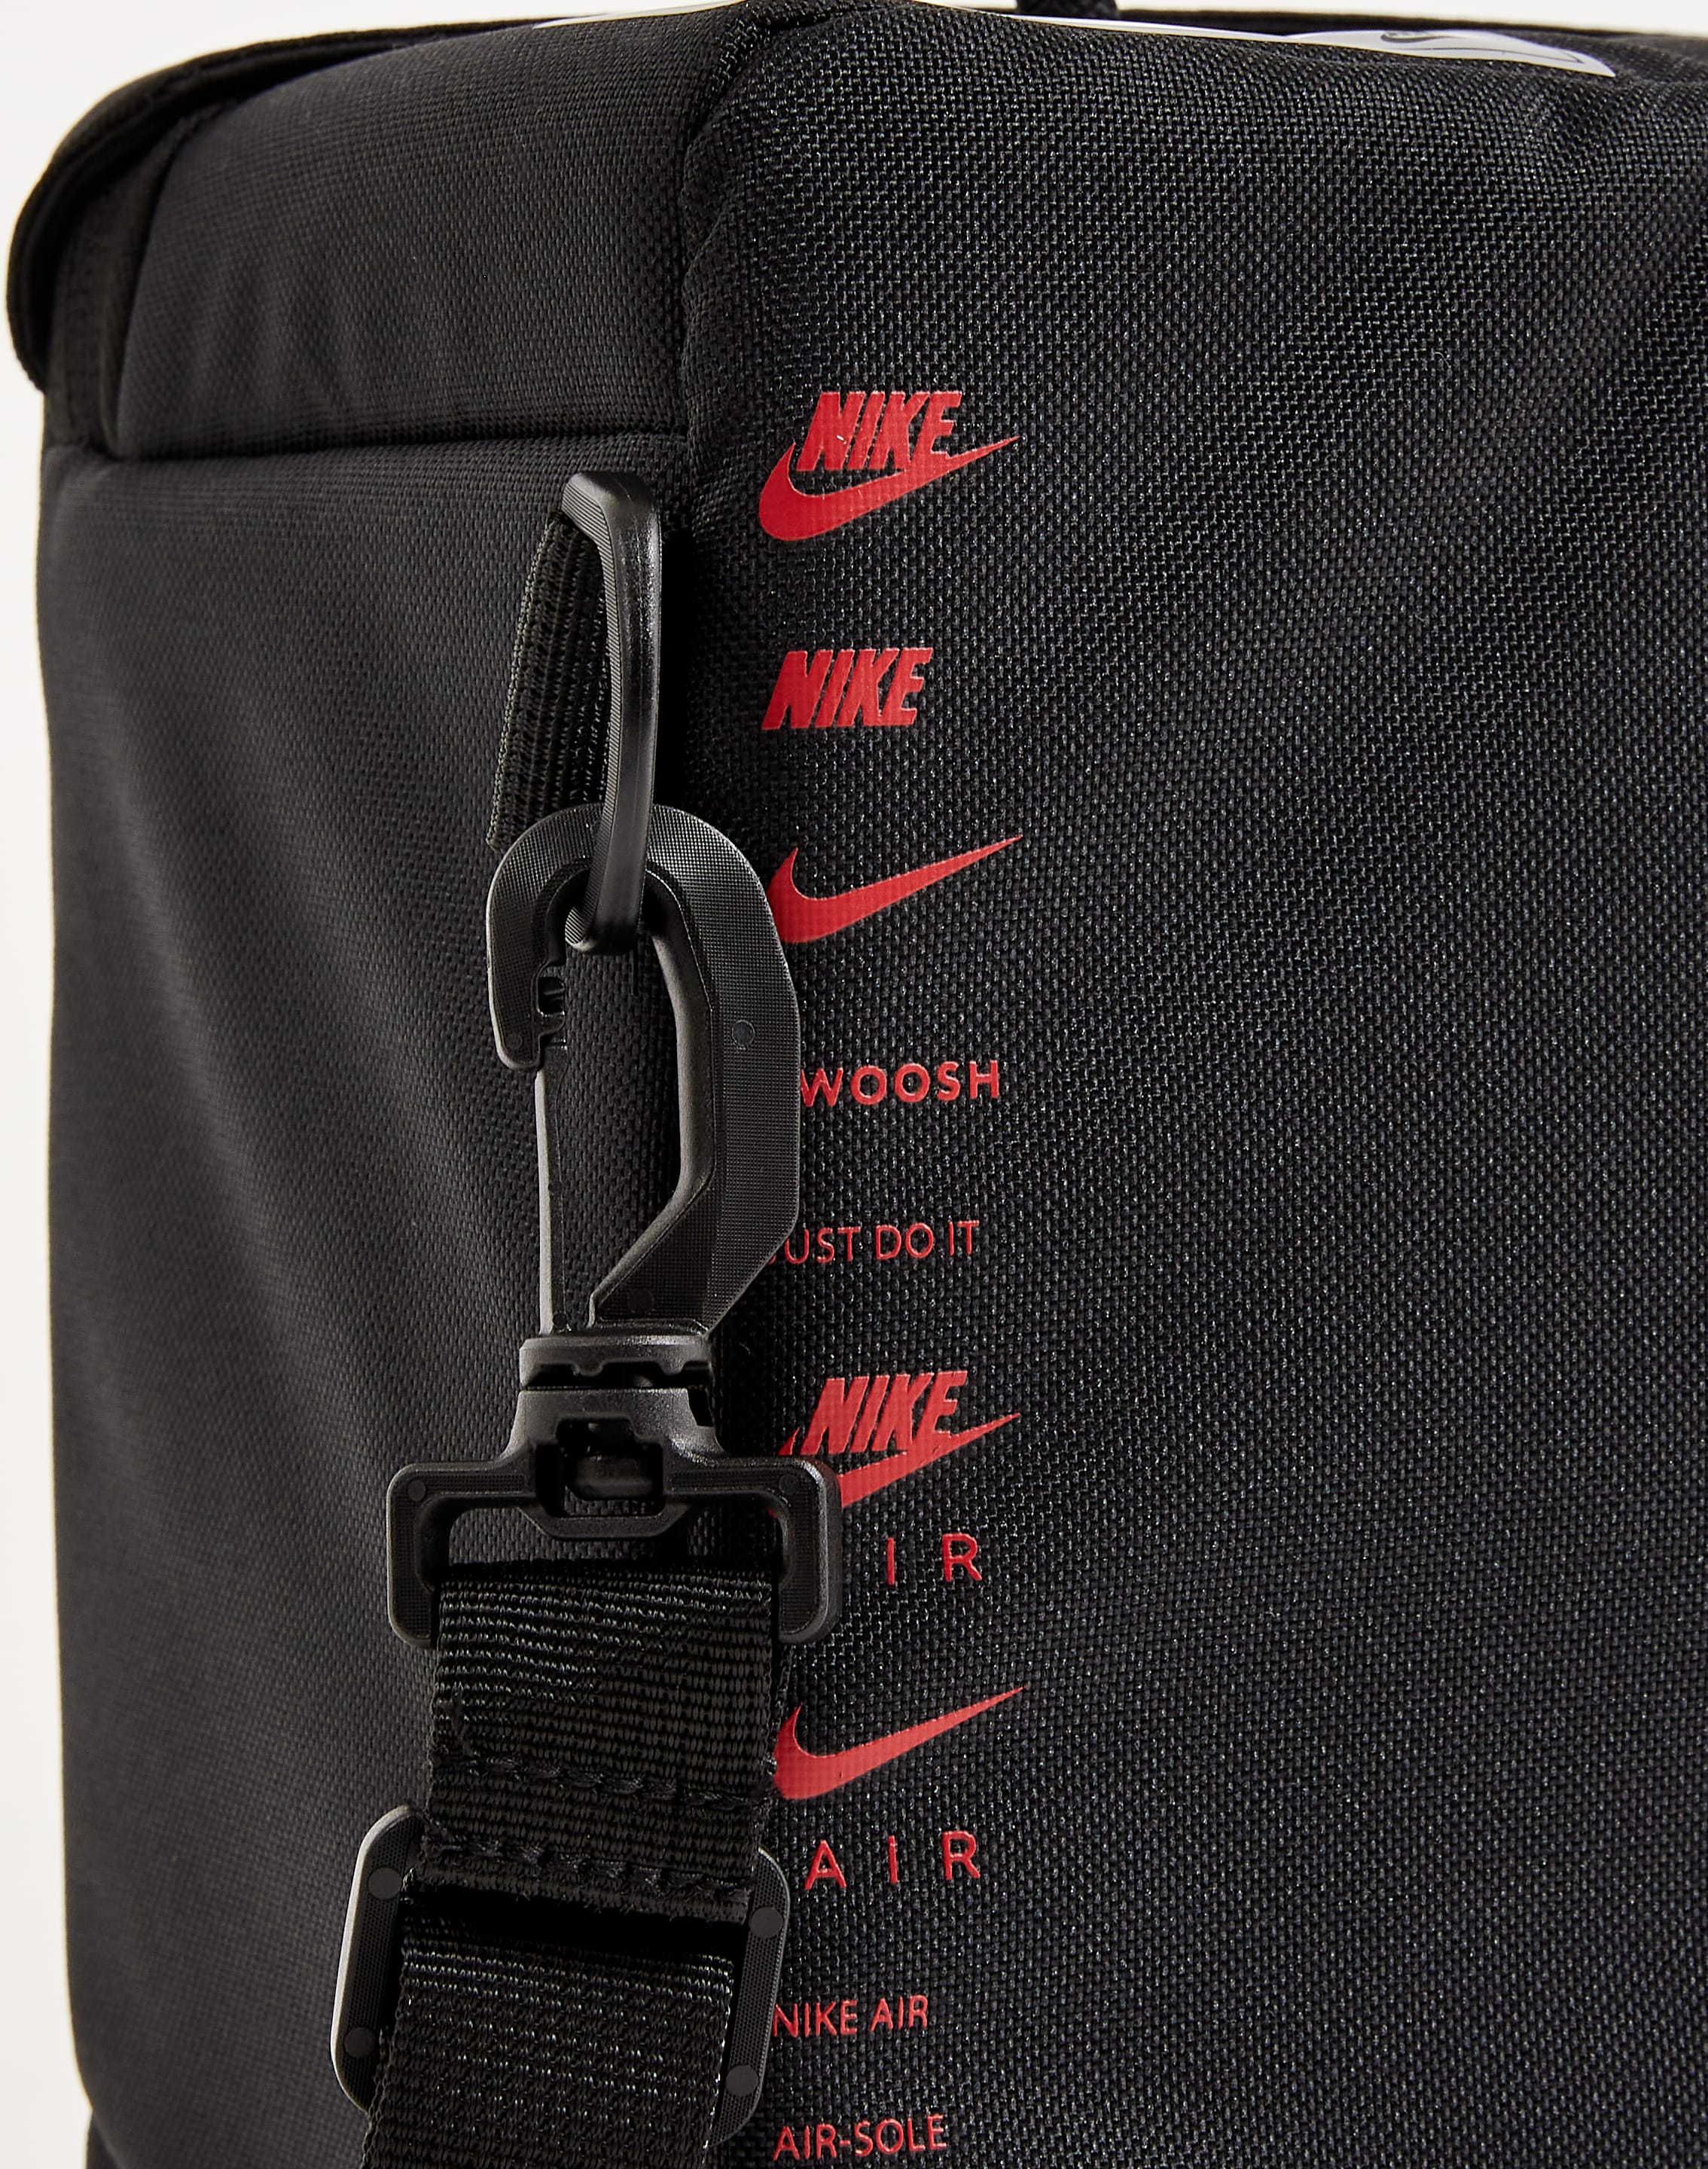 Black Nike Sportswear Shoe Box Bag, Nike Pro Training leggings in grey